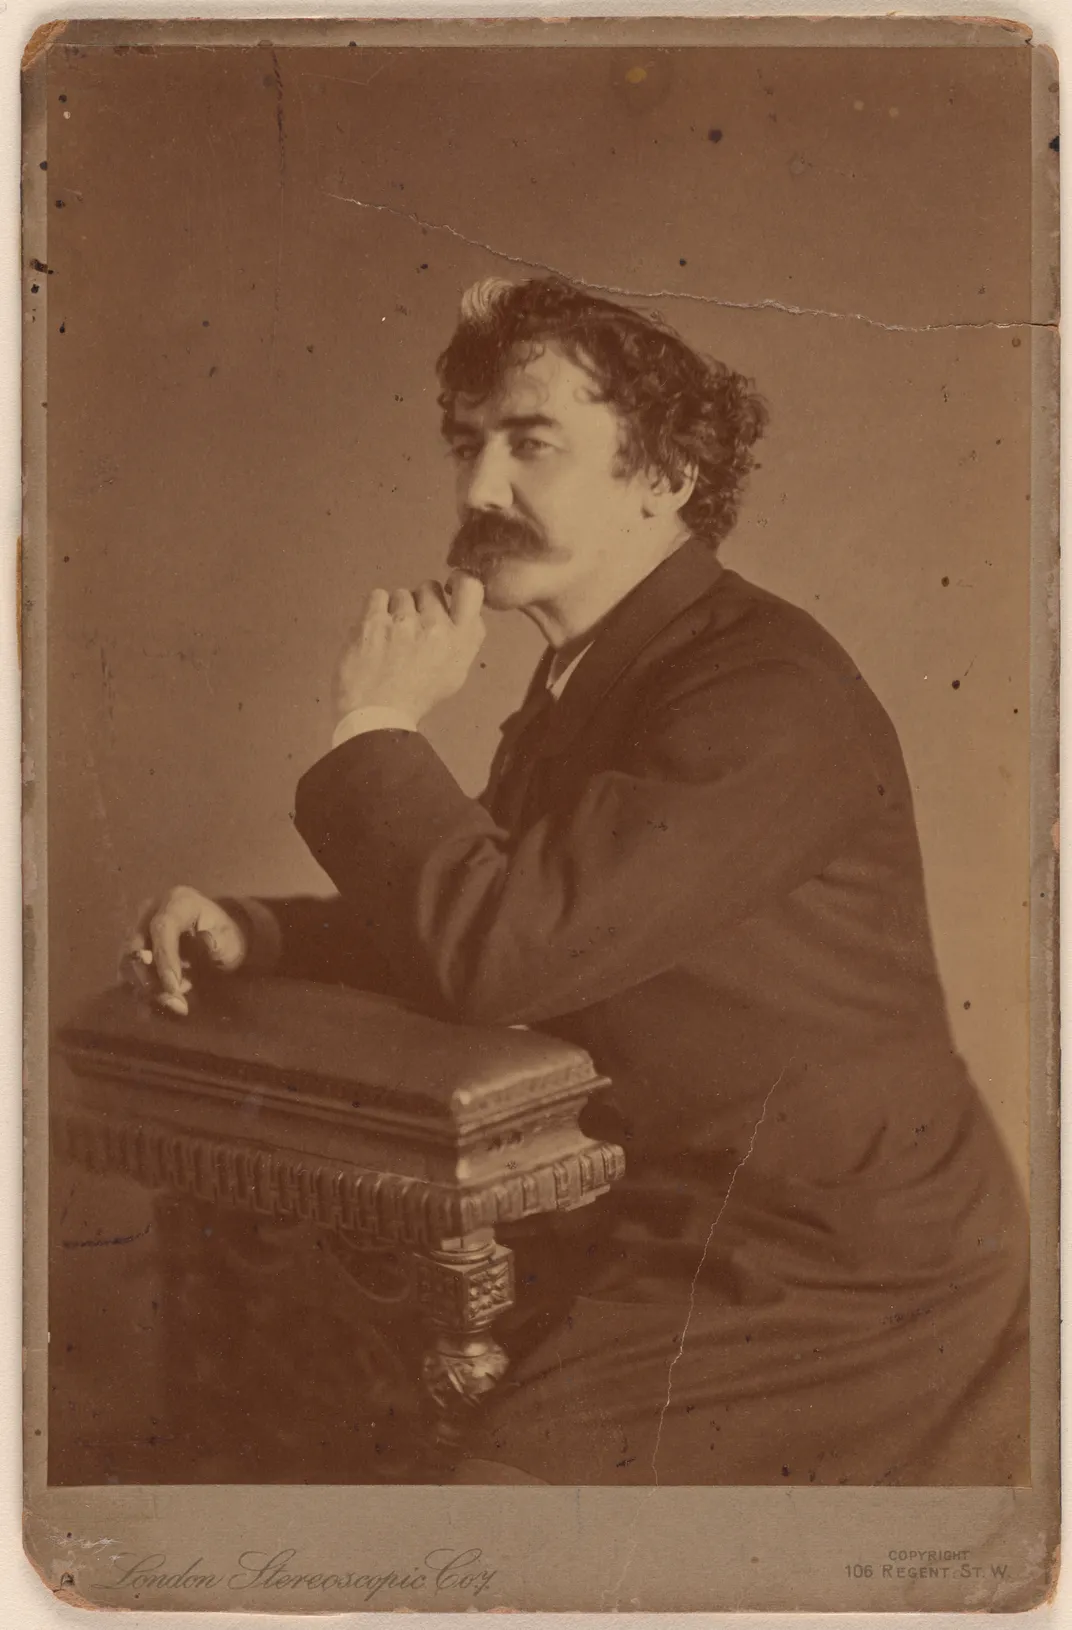 James McNeill Whistler, c. 1870